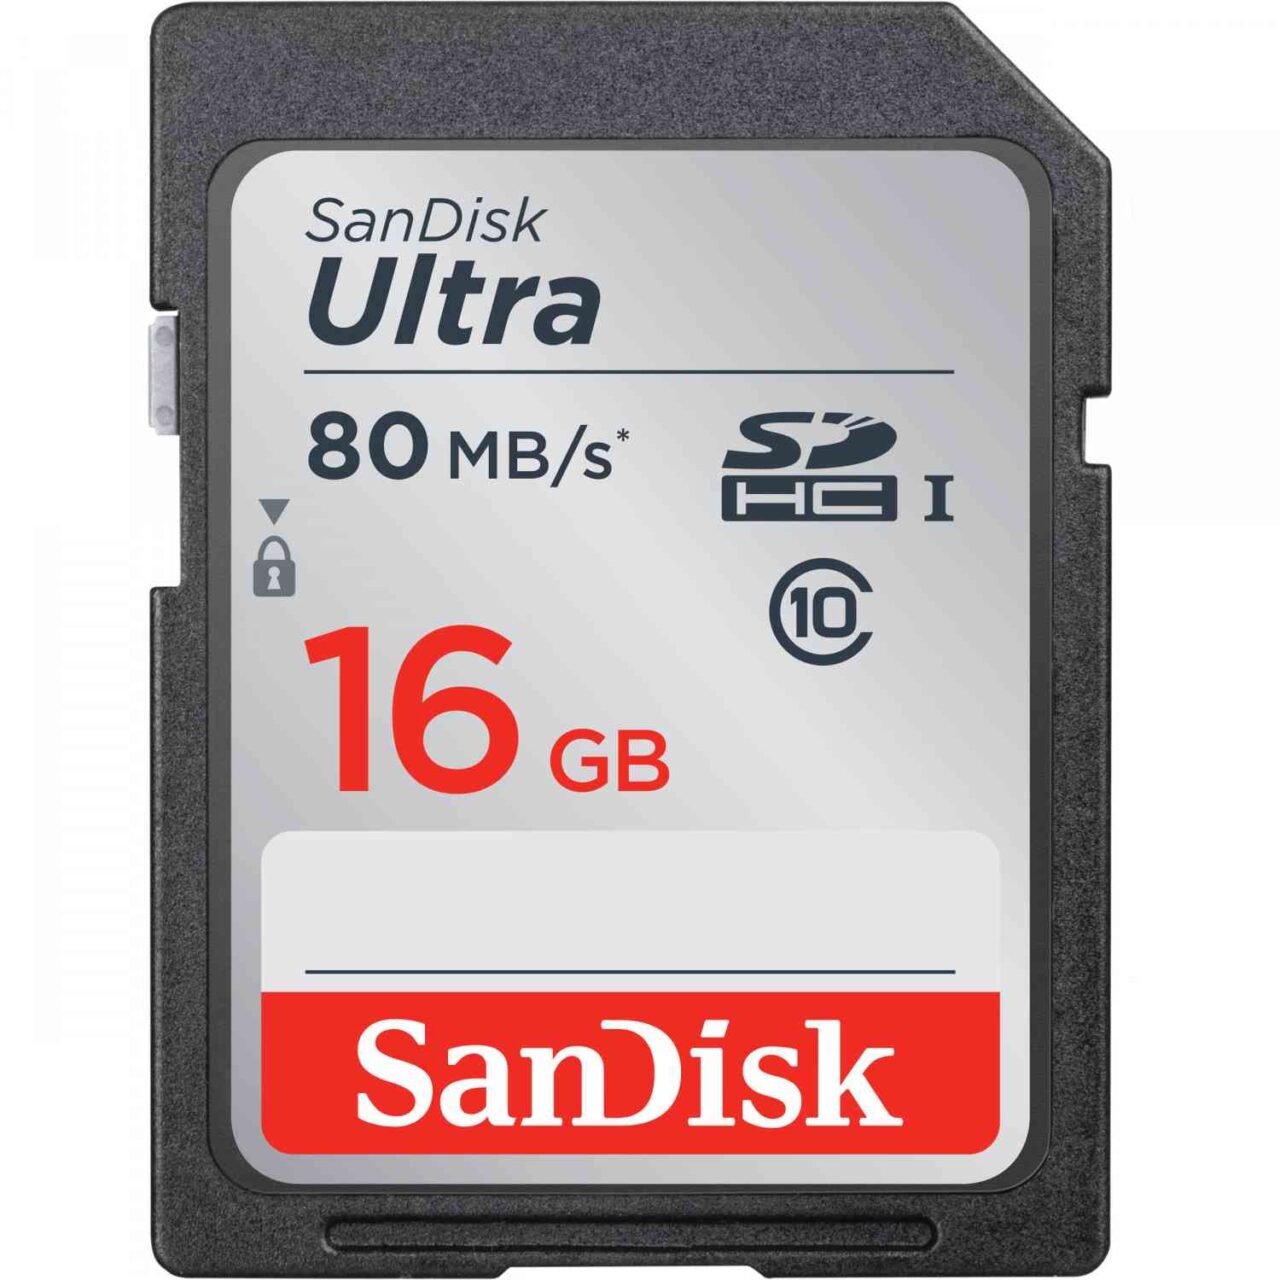 SanDisk 16GB MicroSD class 10